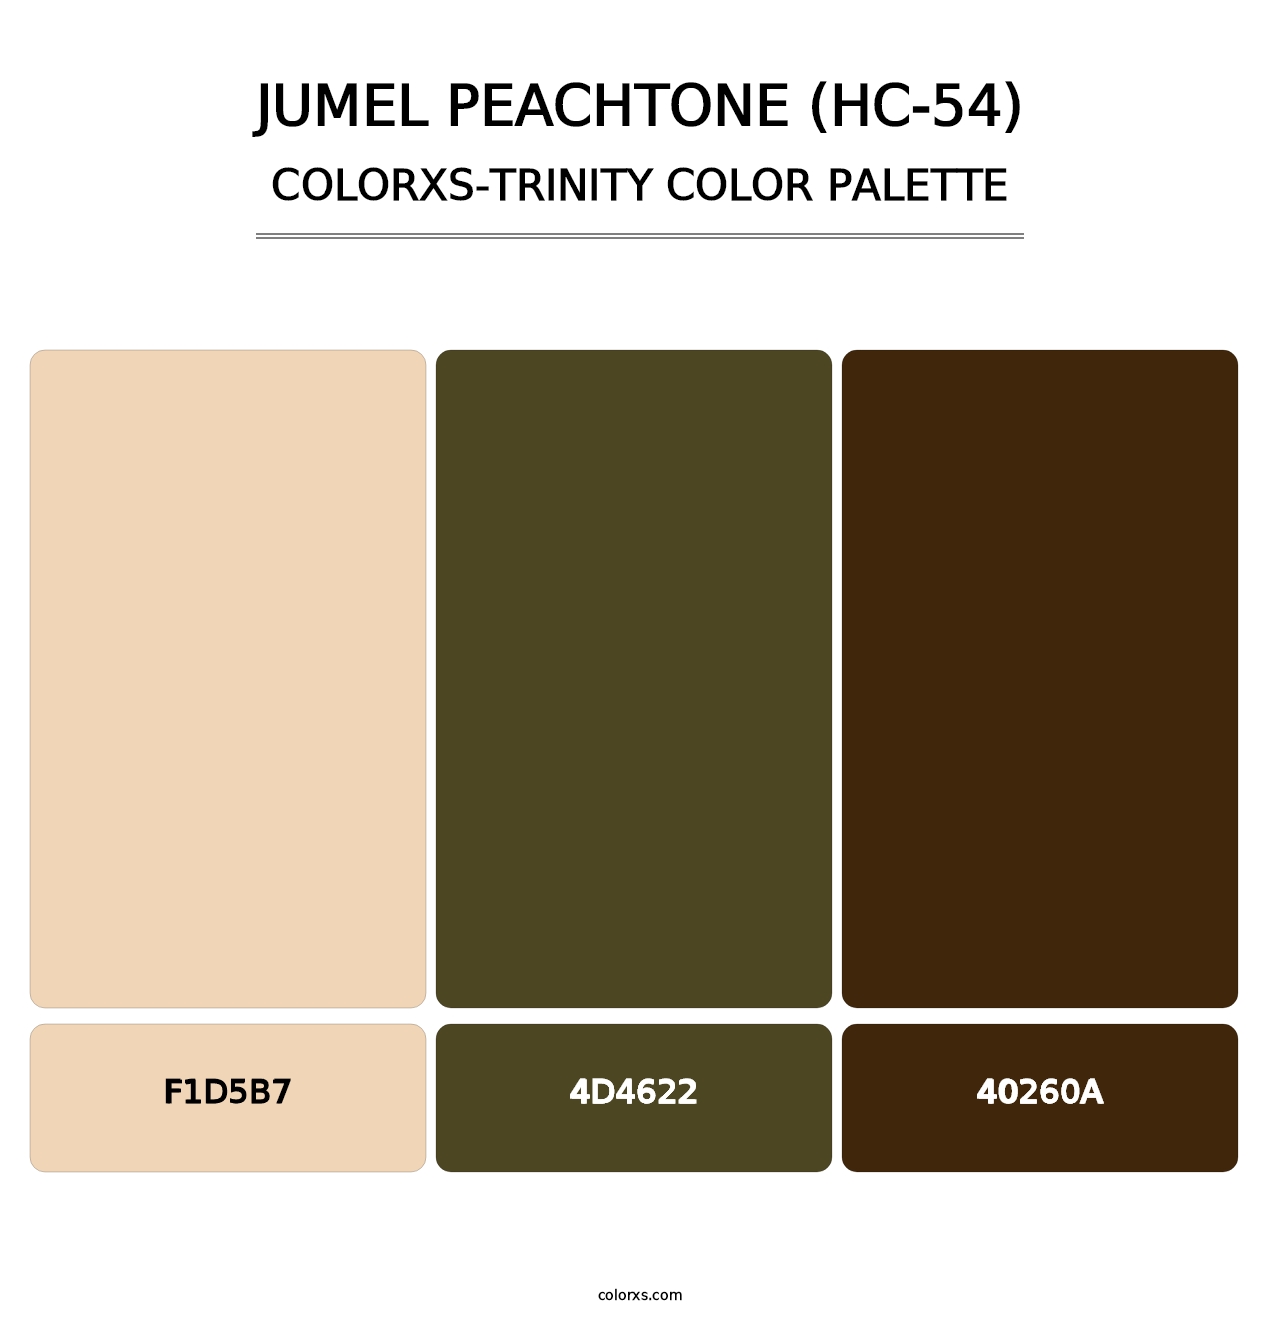 Jumel Peachtone (HC-54) - Colorxs Trinity Palette